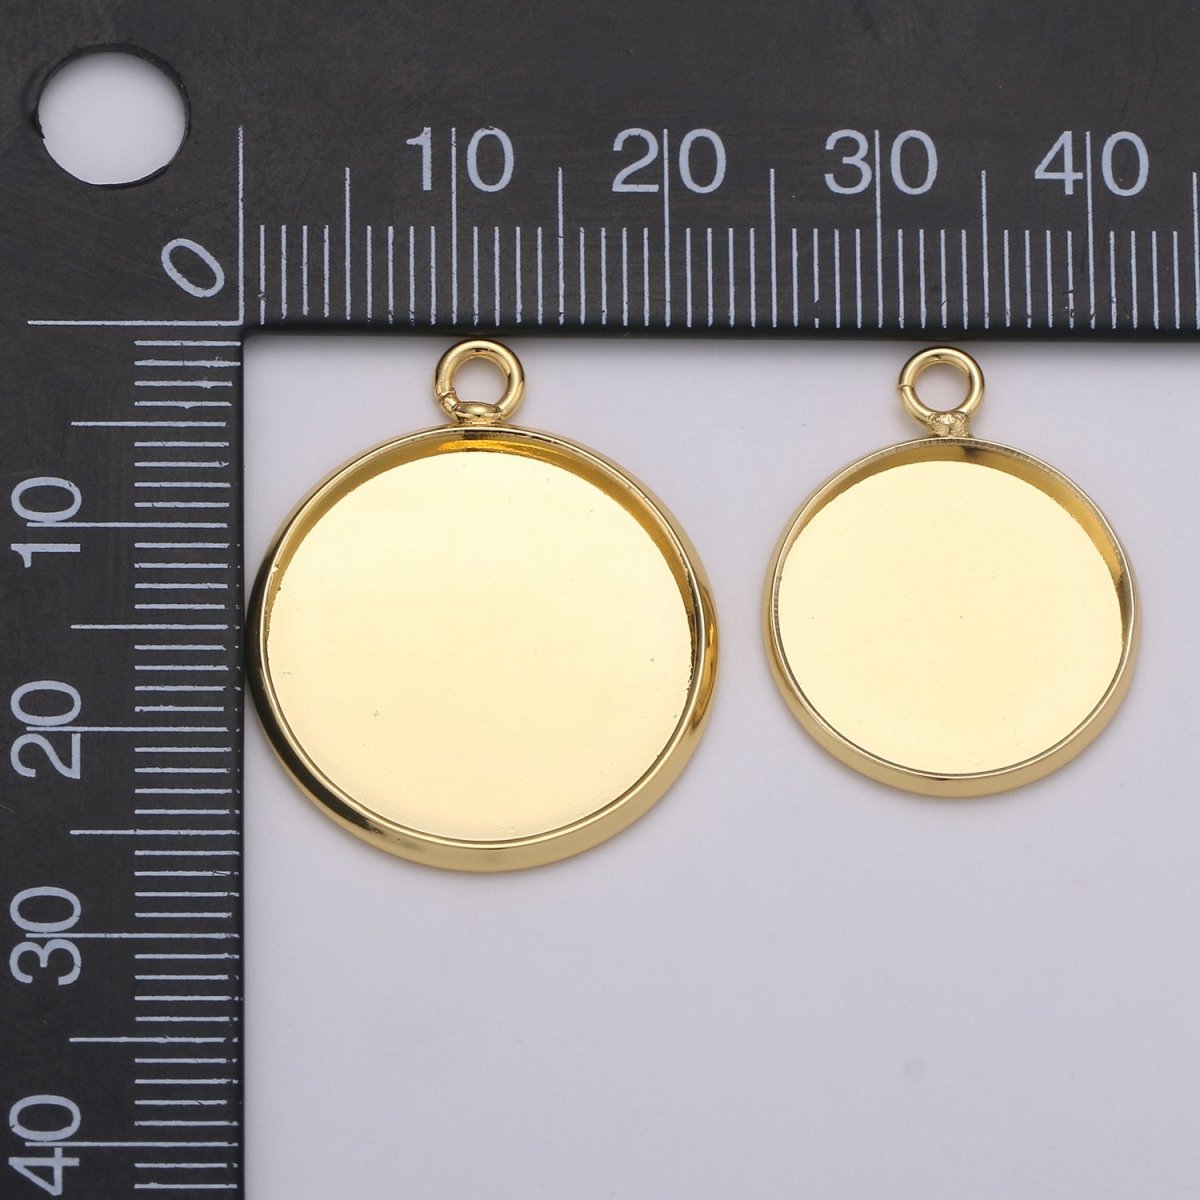 Simple Minimalist Golden Coin Gold Filled Charm K-929,K-930,L-086 - DLUXCA